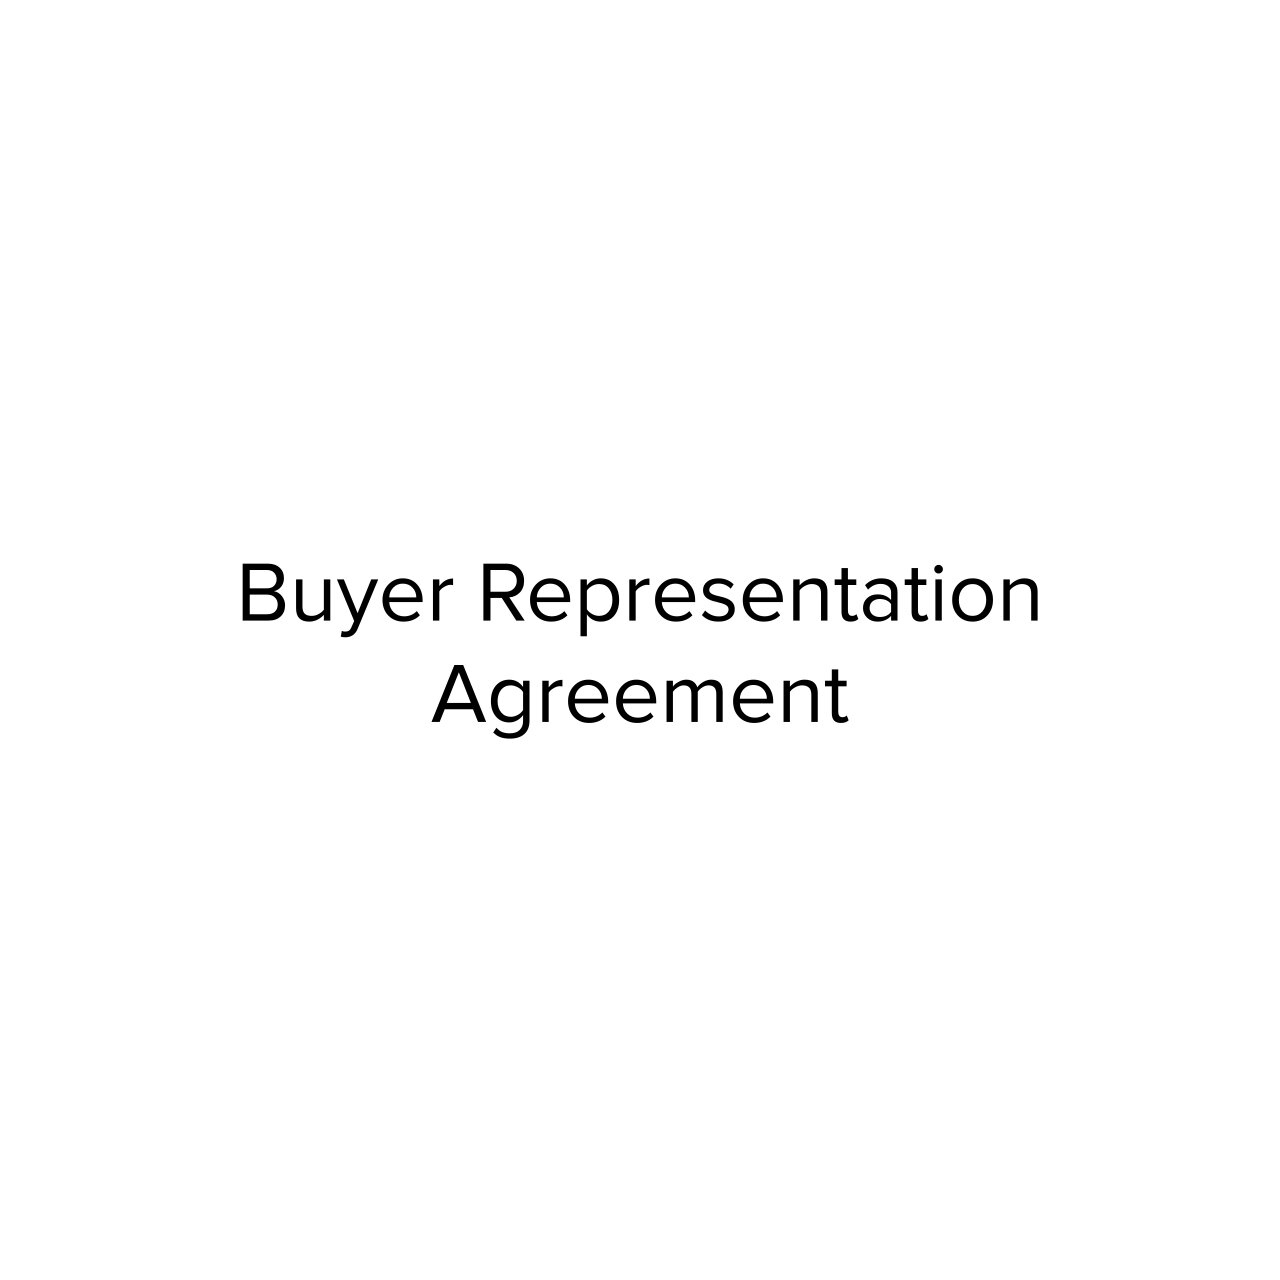 Buyer Representation Agreement.jpg